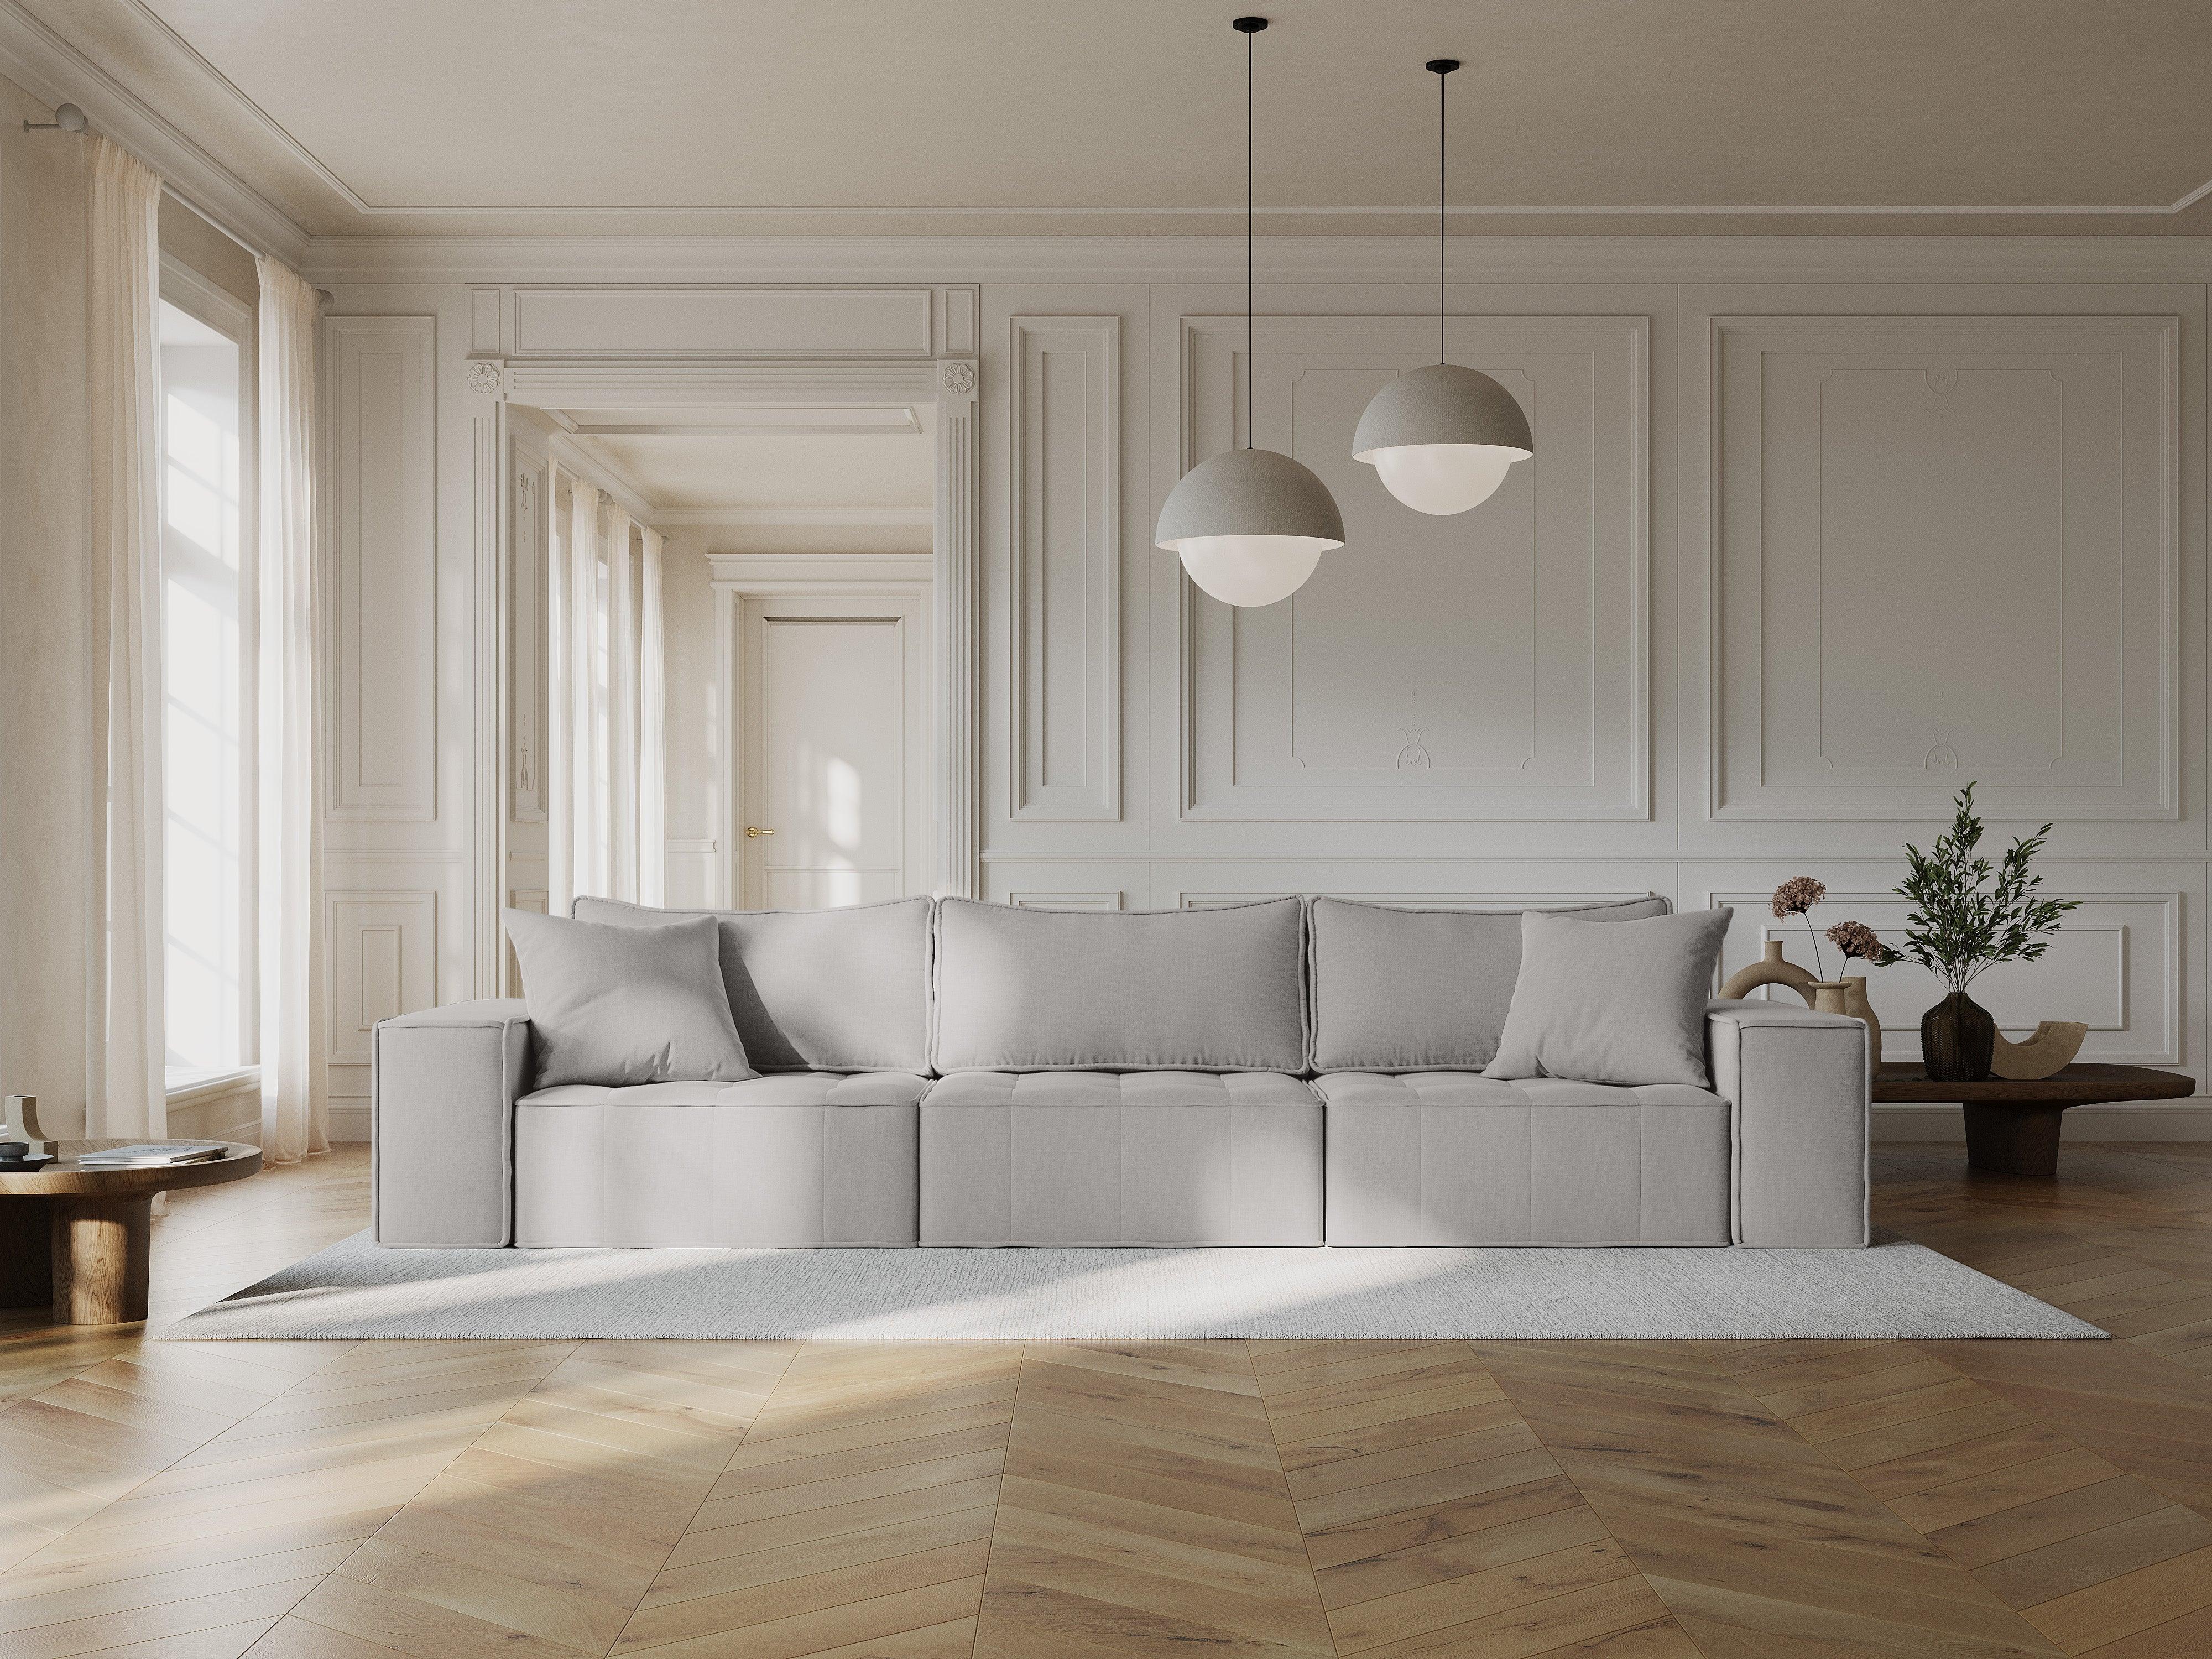 Sofa 5-osobowa VERLET jasnoszary Interieurs 86    Eye on Design